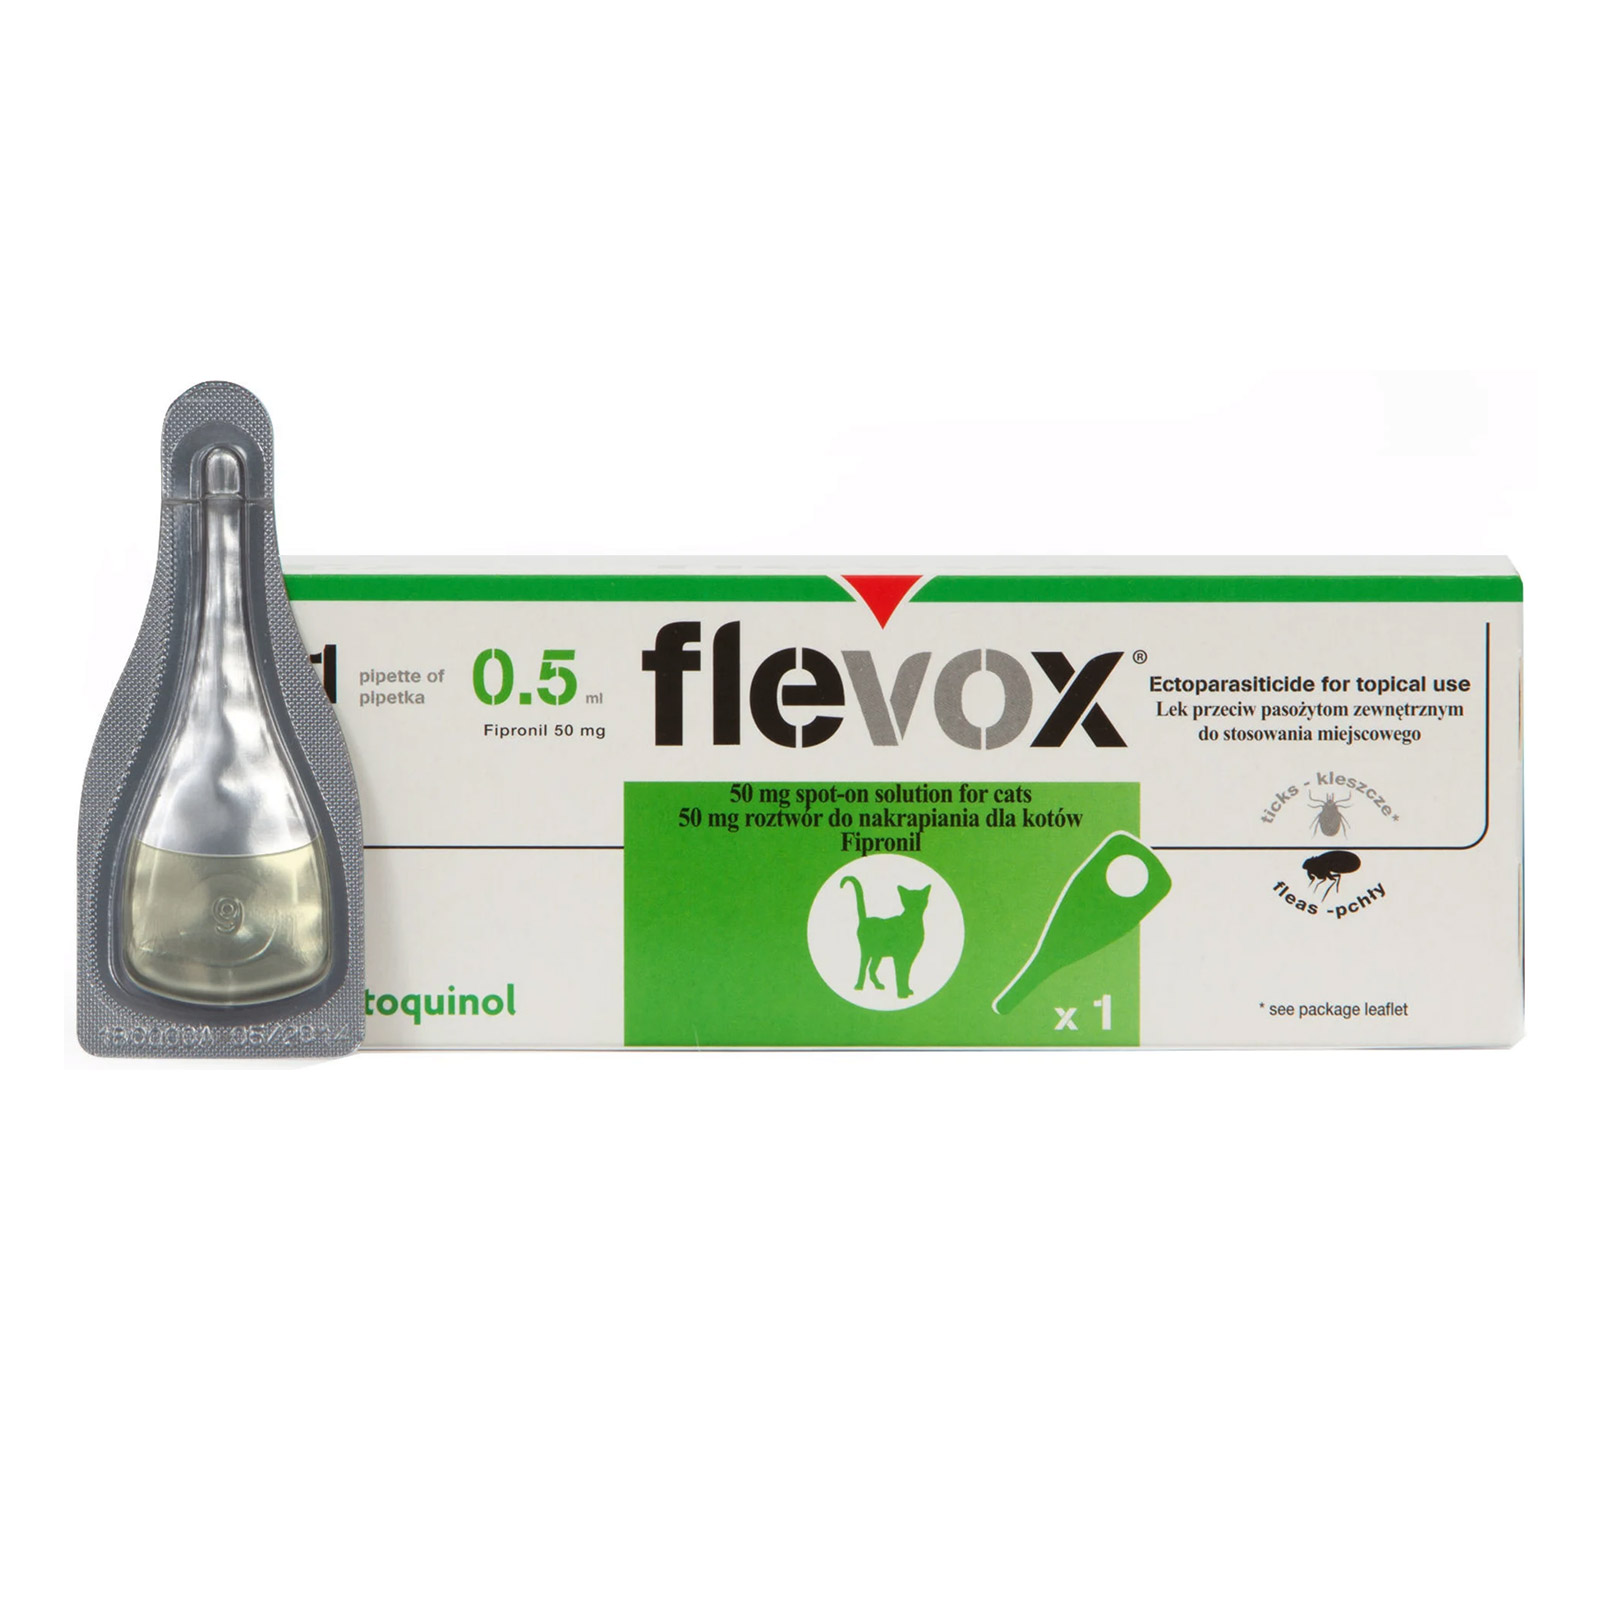 Flevox For Cats 6 Pack
